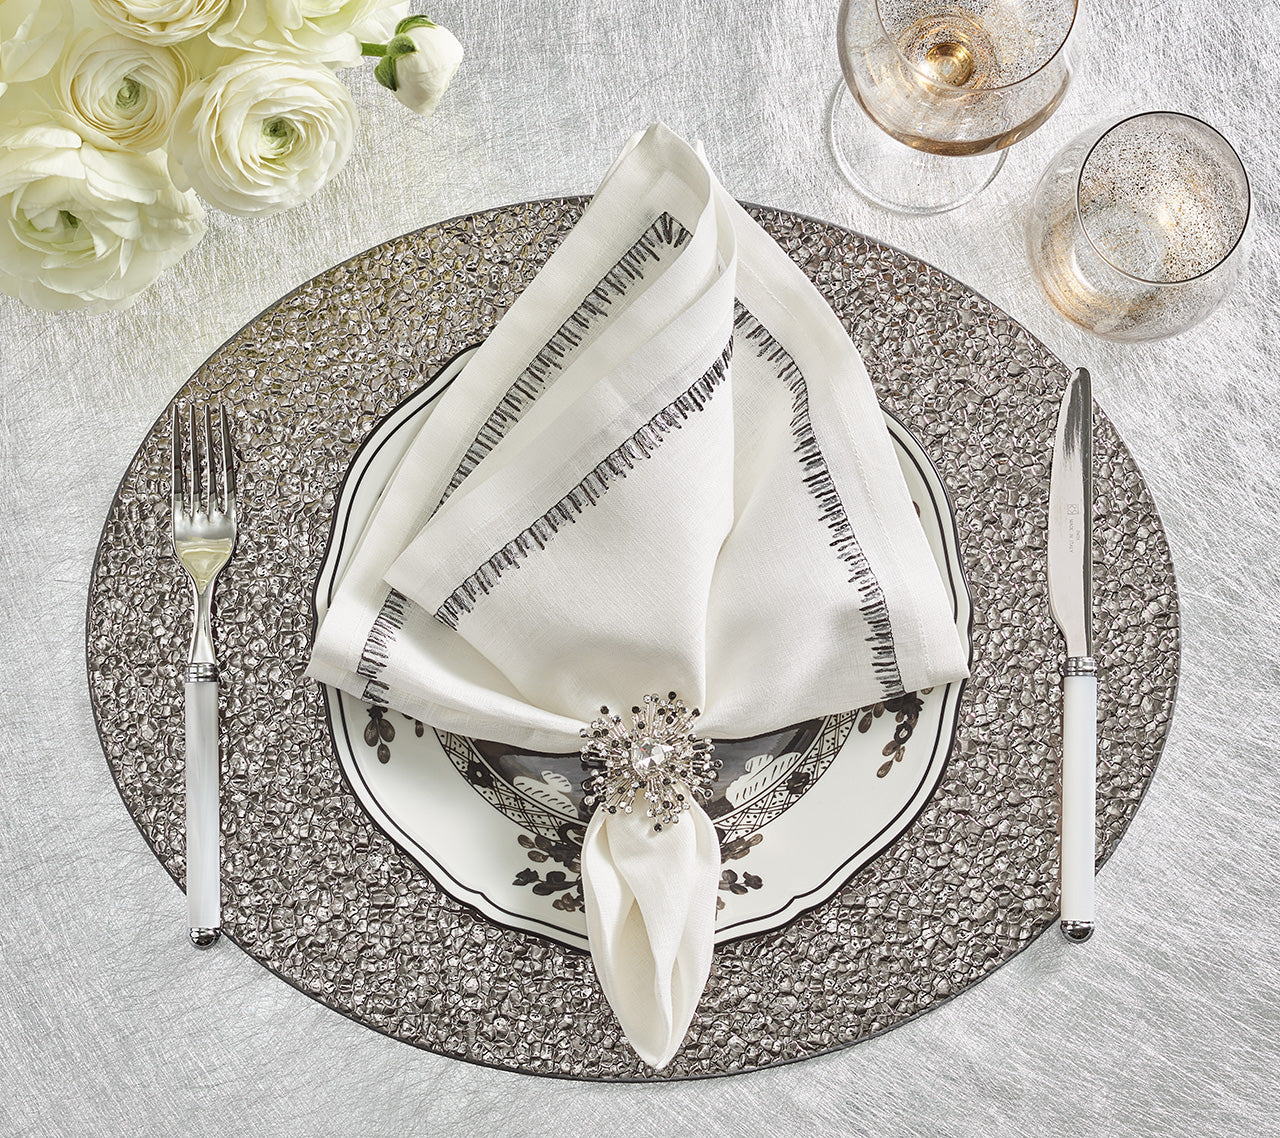 Kim Seybert Luxury Gem Burst Napkin Ring in Crystal & Silver in a Gift Box